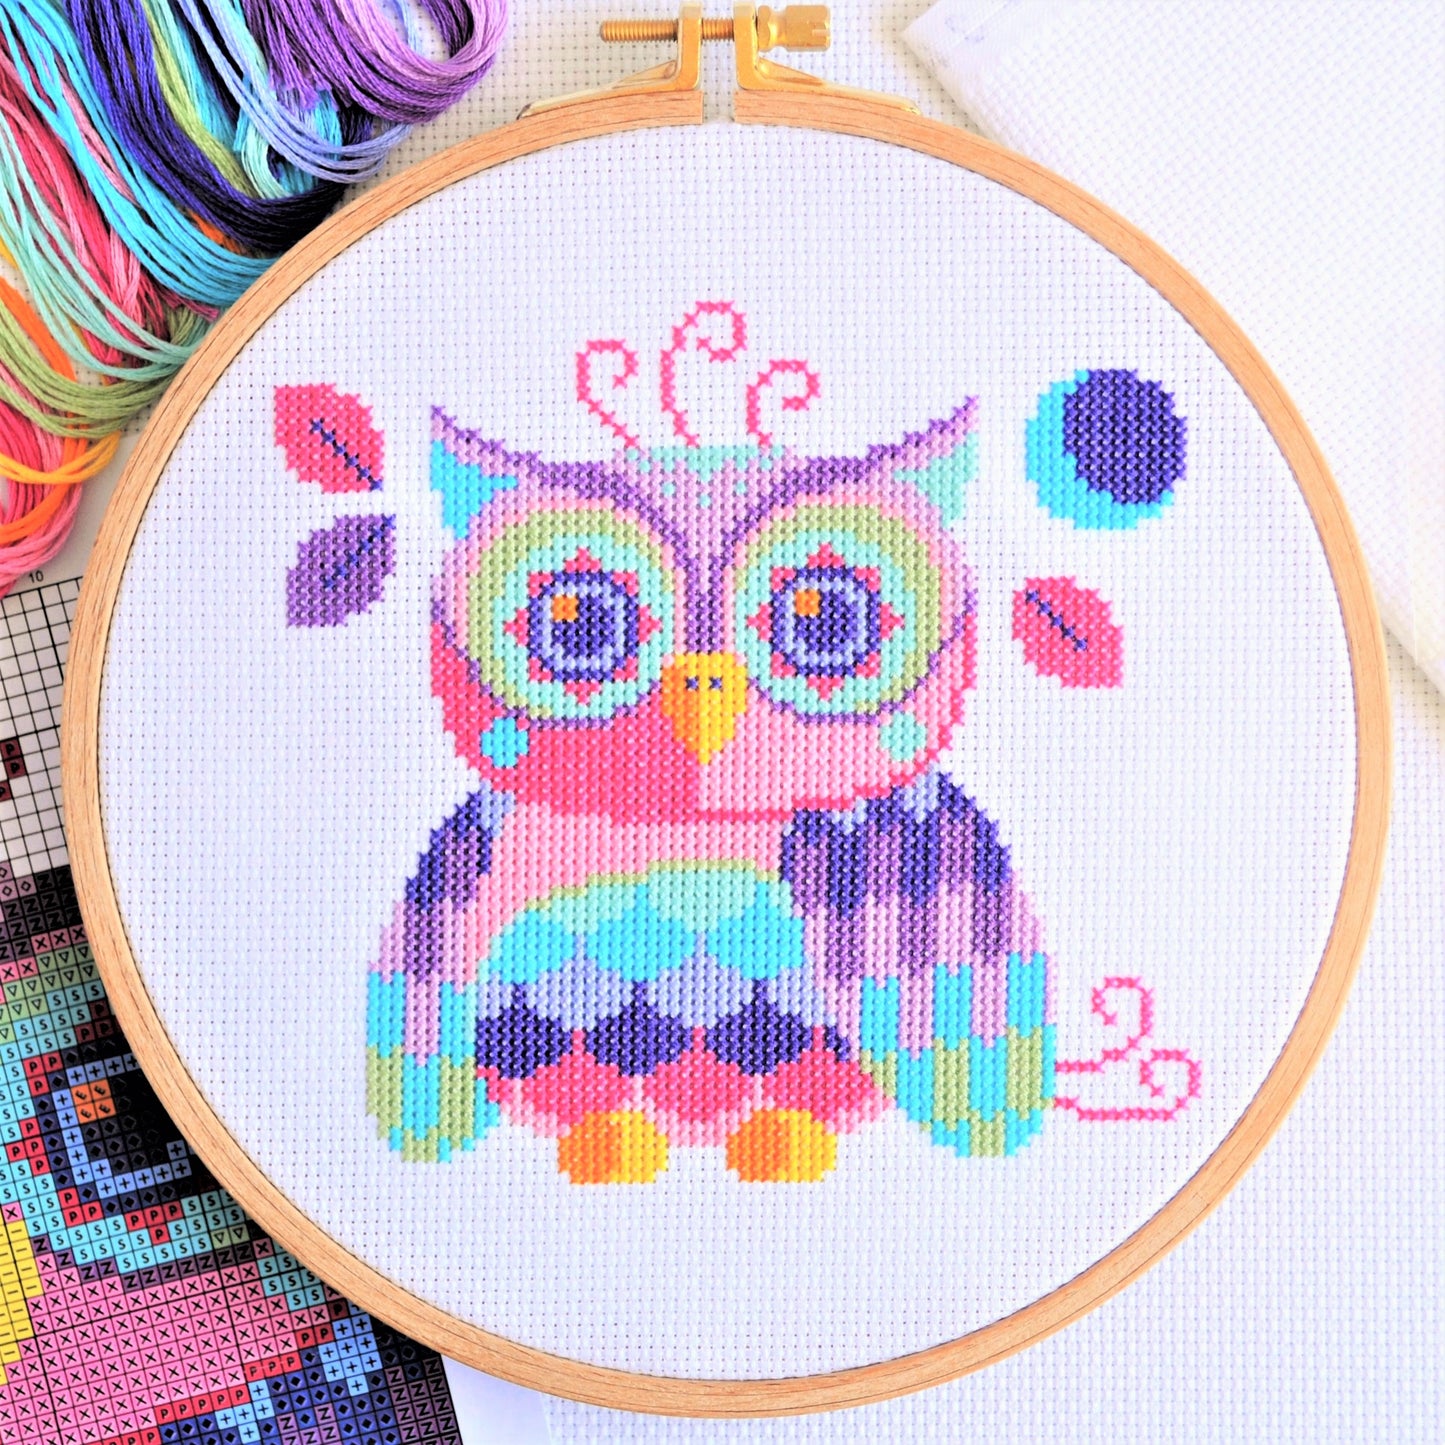 Florence the Owl Cross Stitch Kit